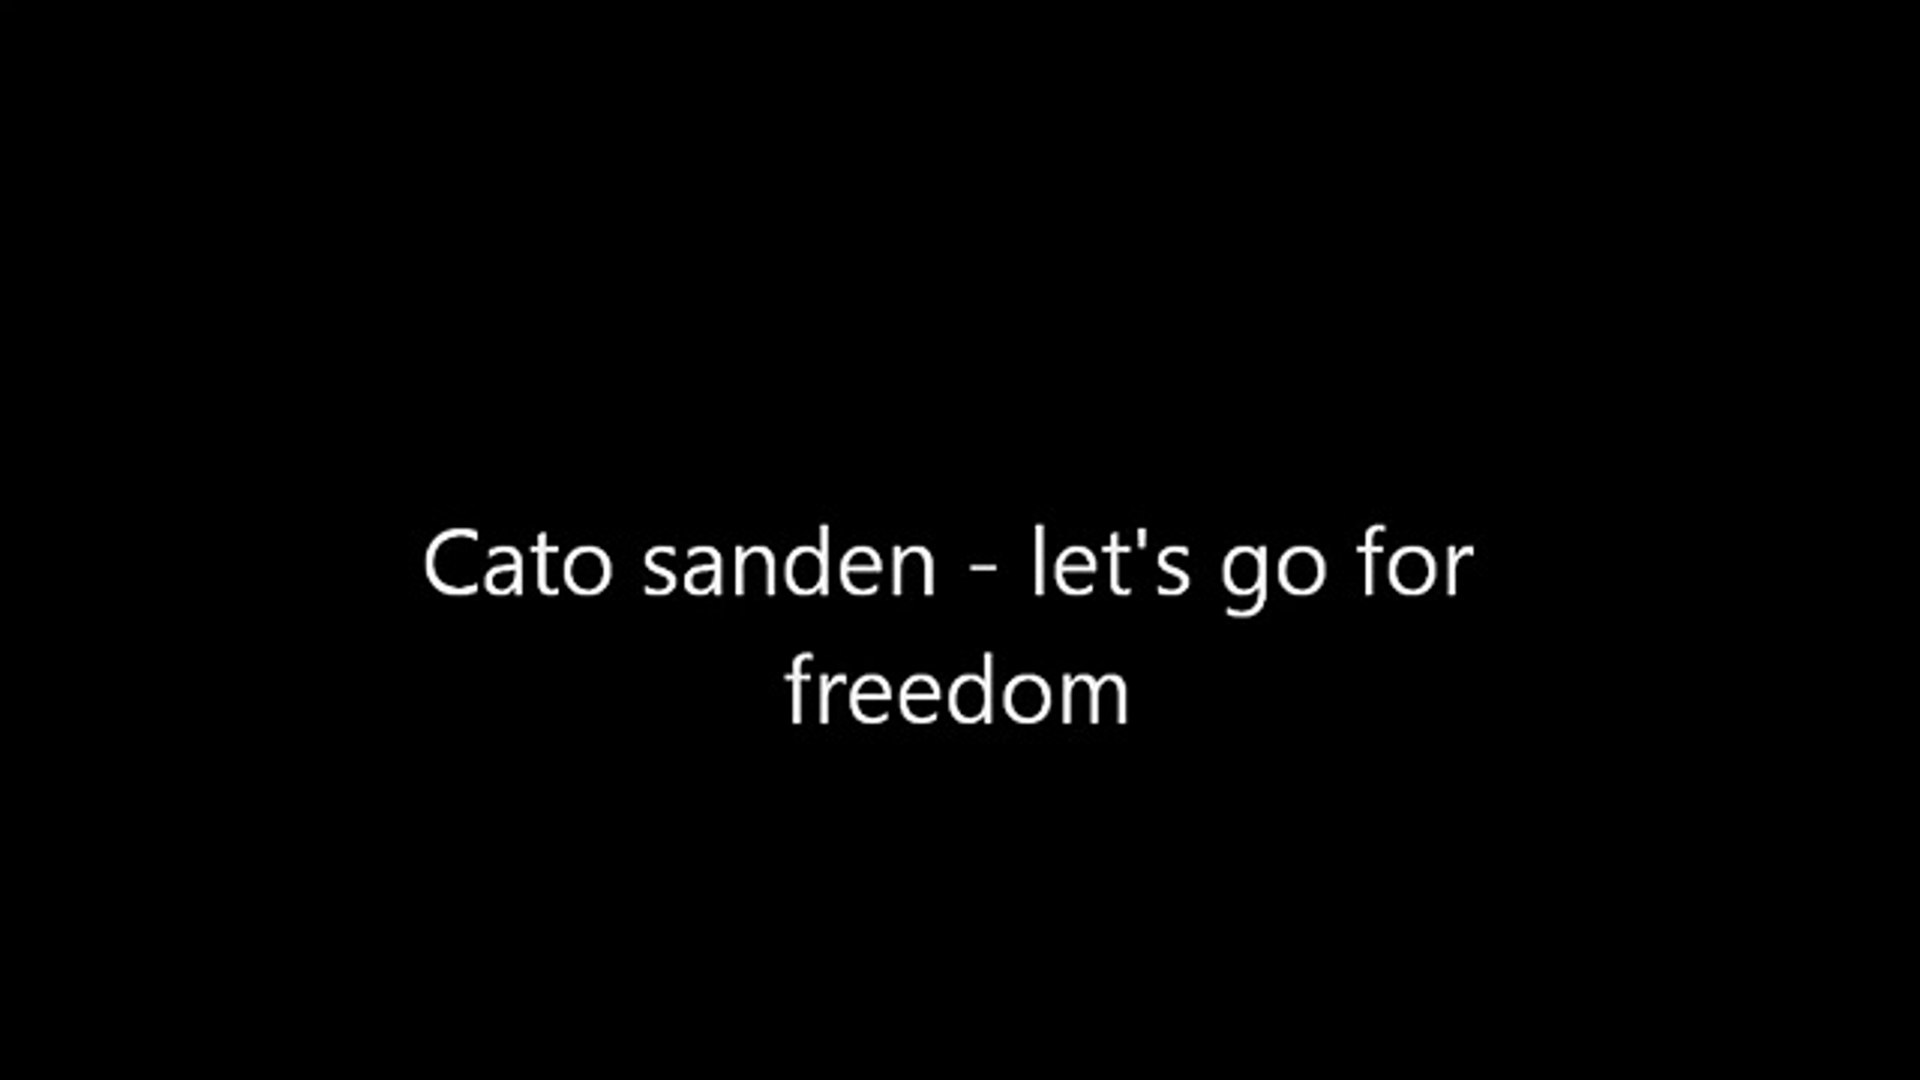 Cato sanden - let's go for freedom